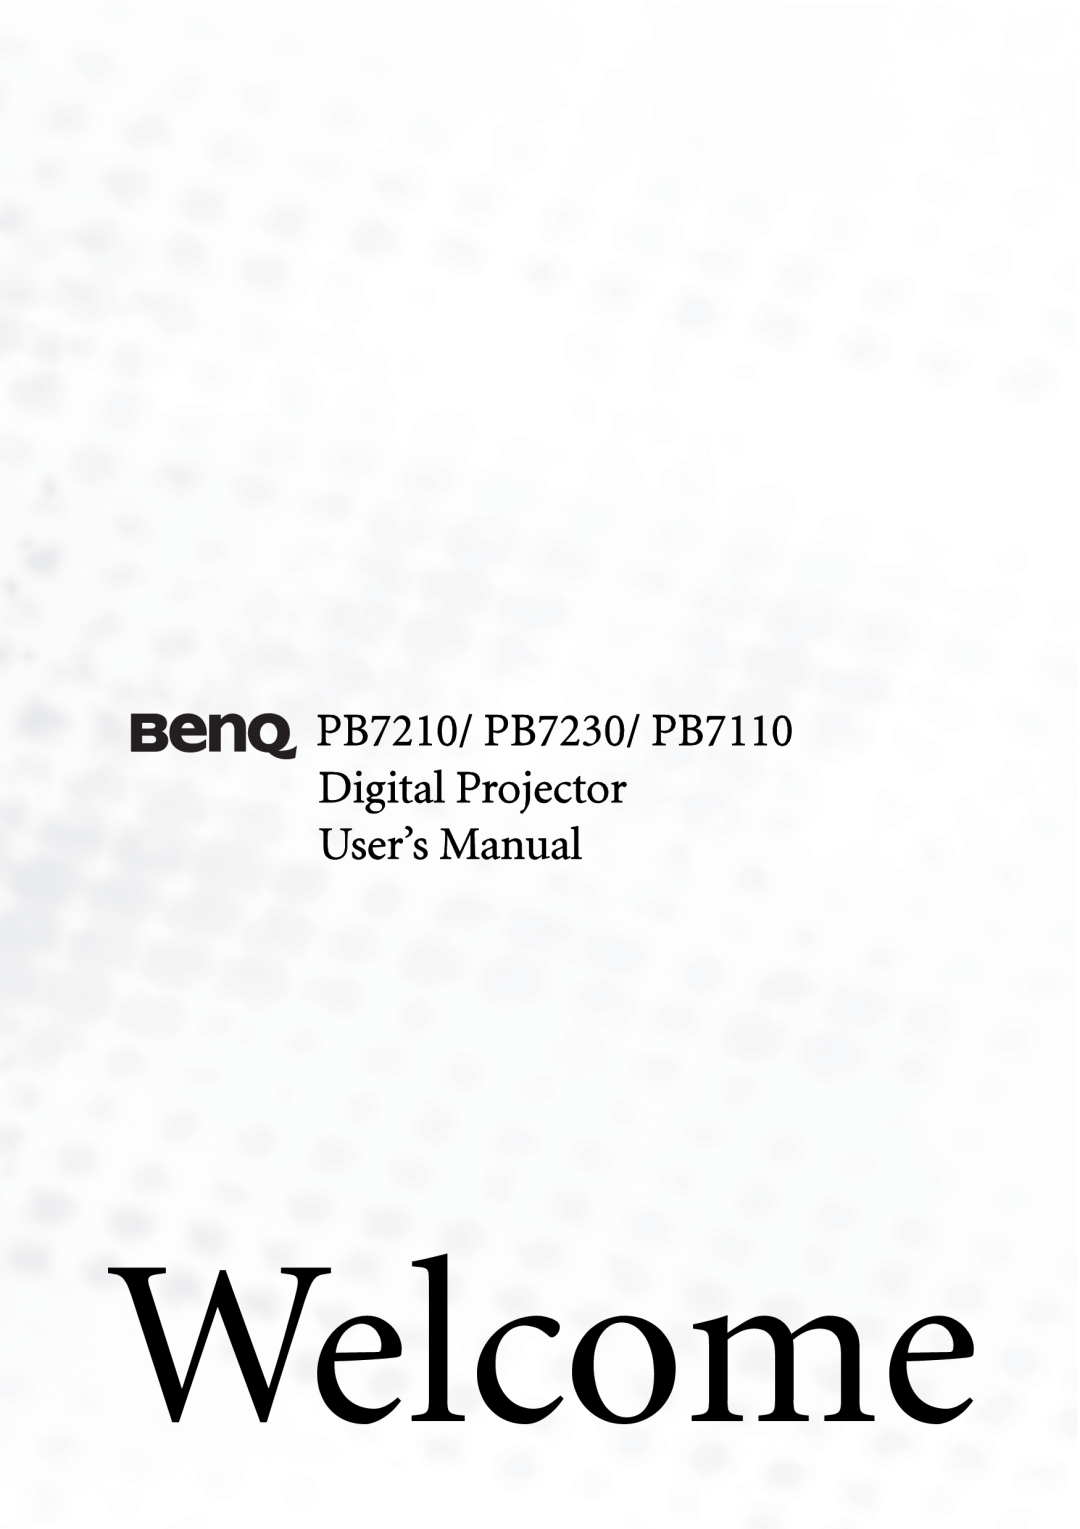 BenQ manual PB7210/ PB7230/ PB7110 Digital Projector User’s Manual, Welcome 